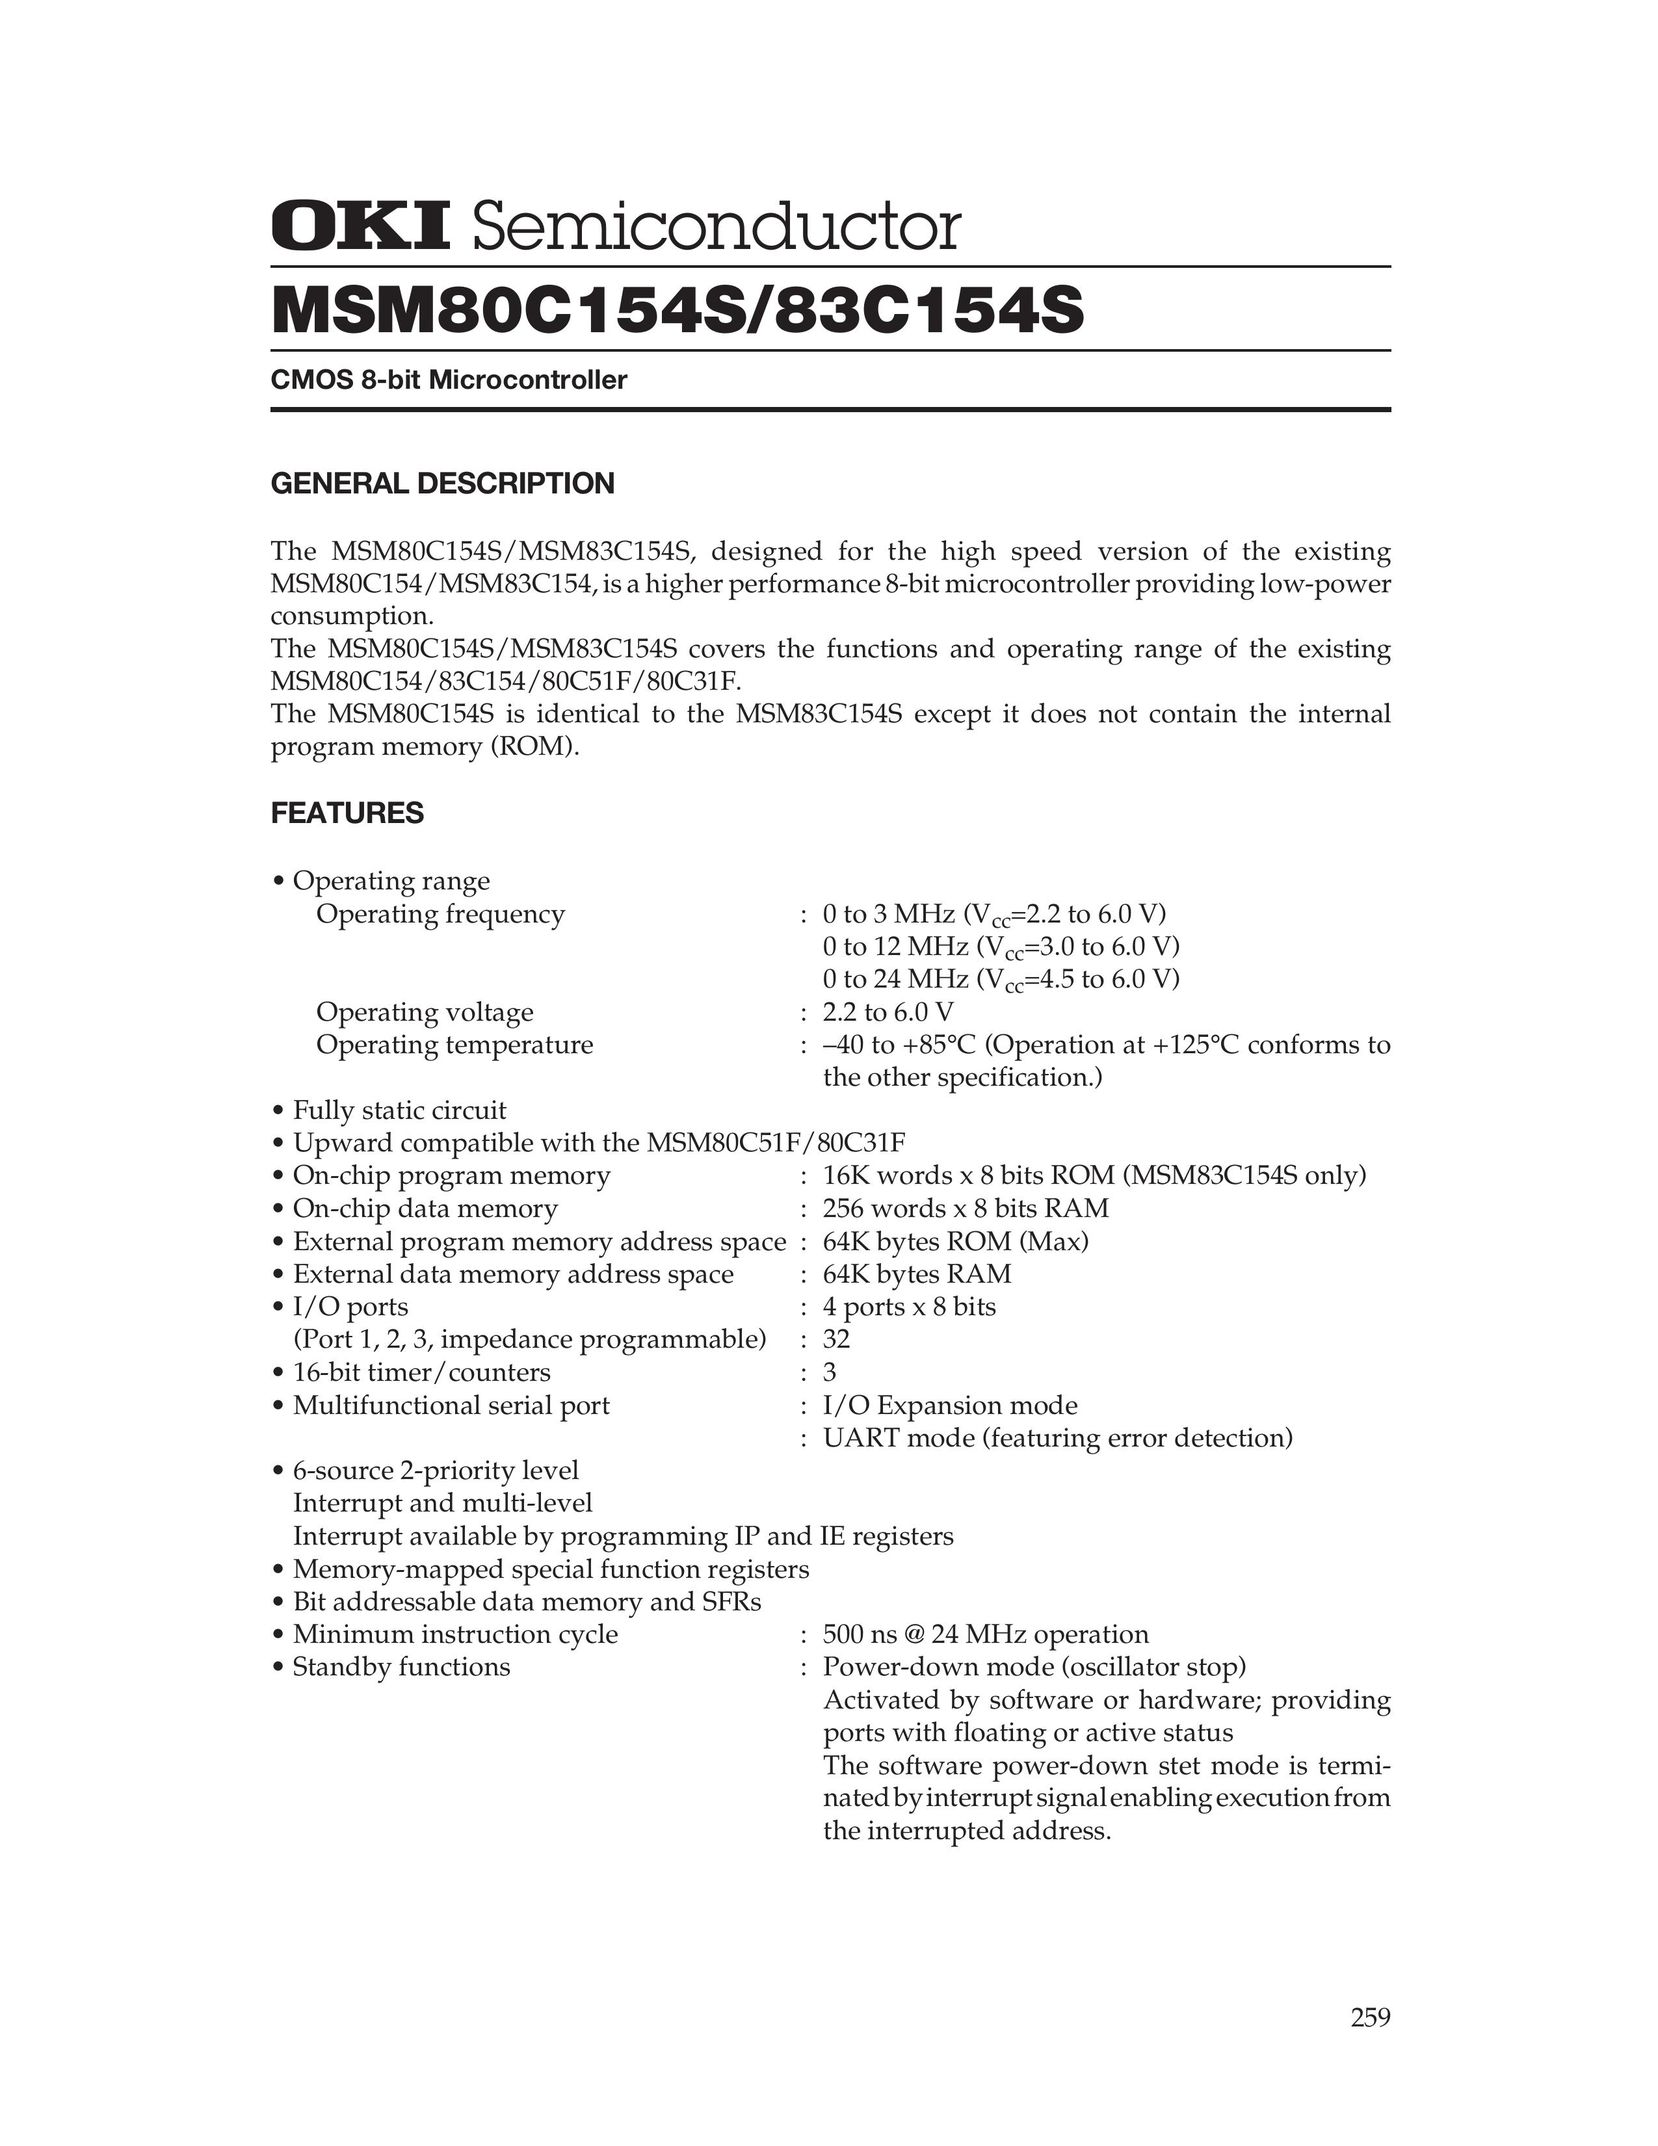 Oki MSM80C154S Network Card User Manual